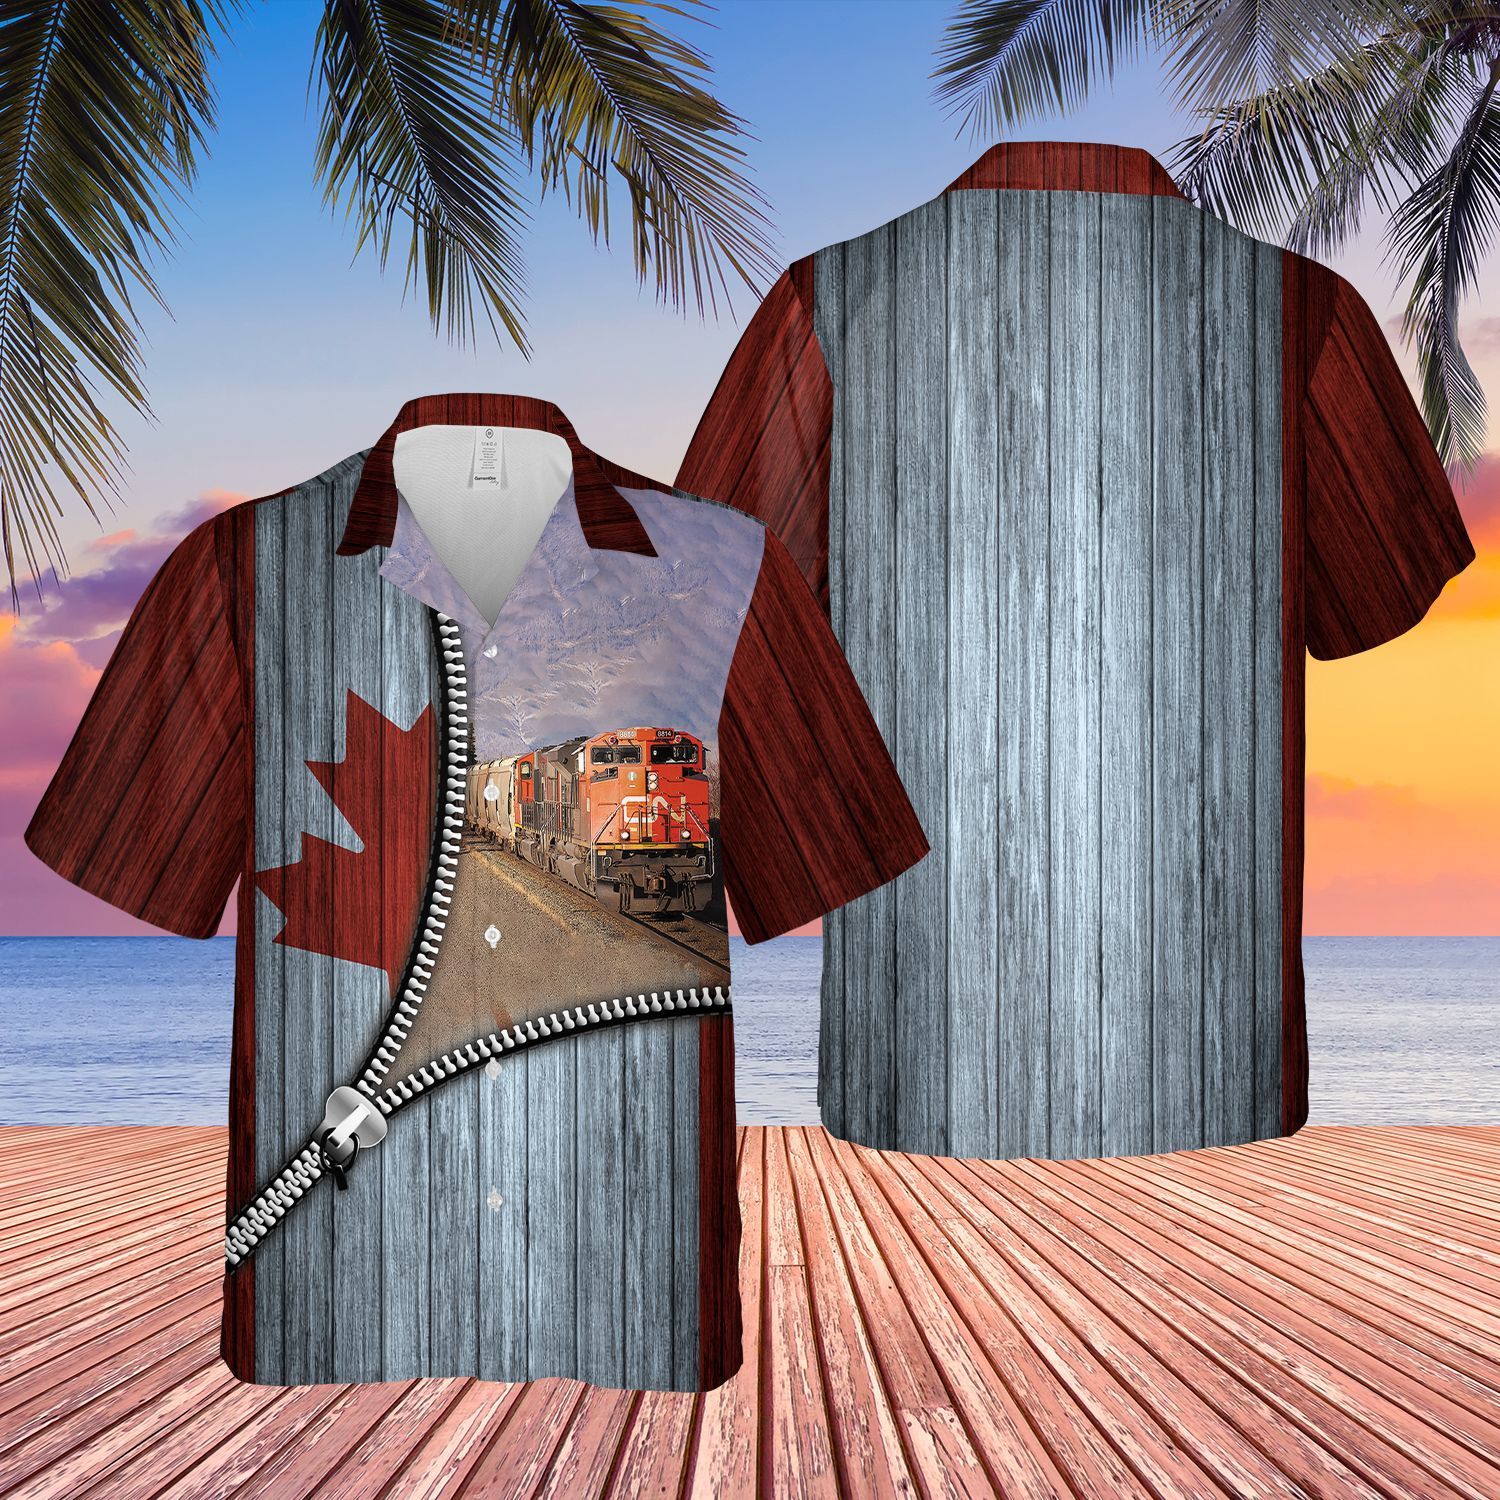 Enjoy your summer with top cool hawaiian shirt below 94